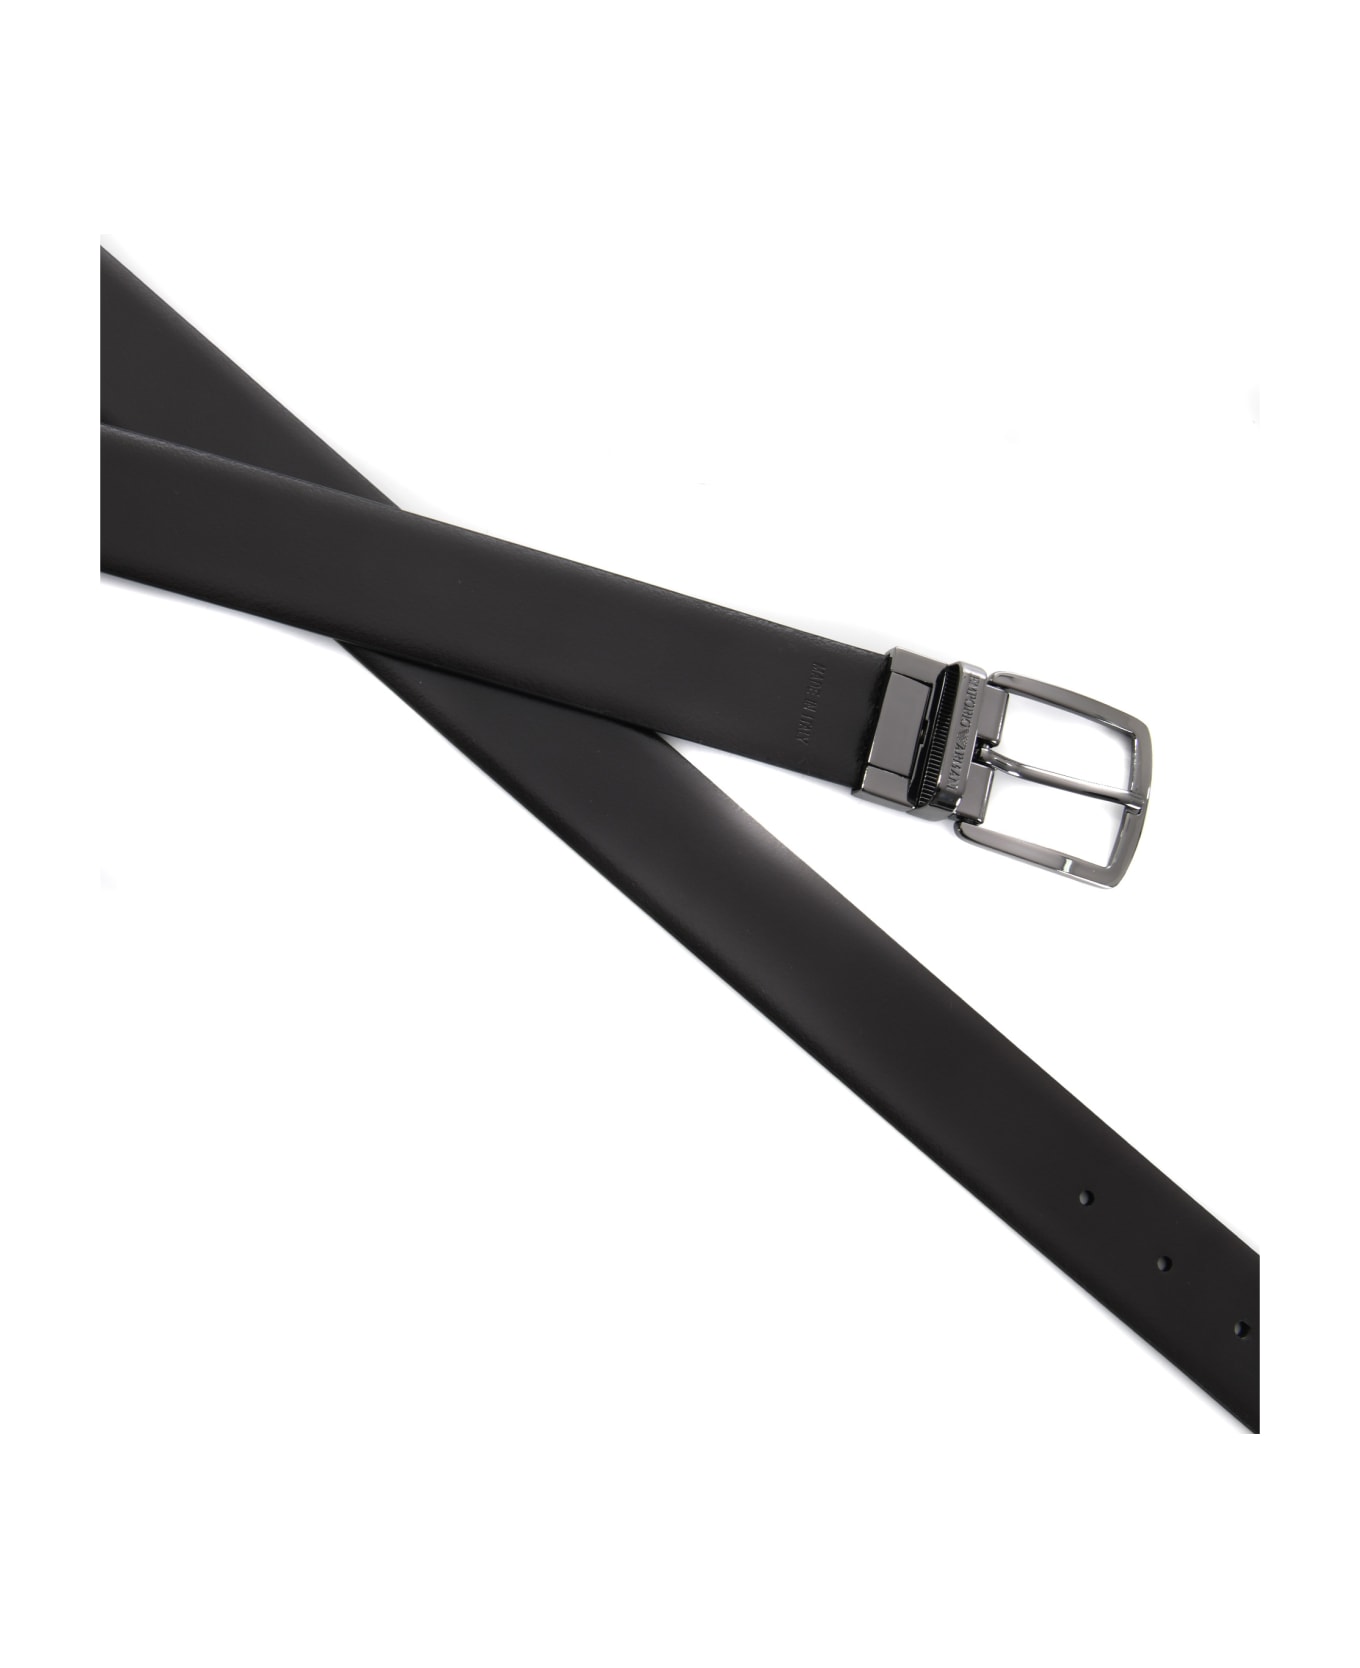 Emporio Armani Reversible Belt In Leather - Nero/moro